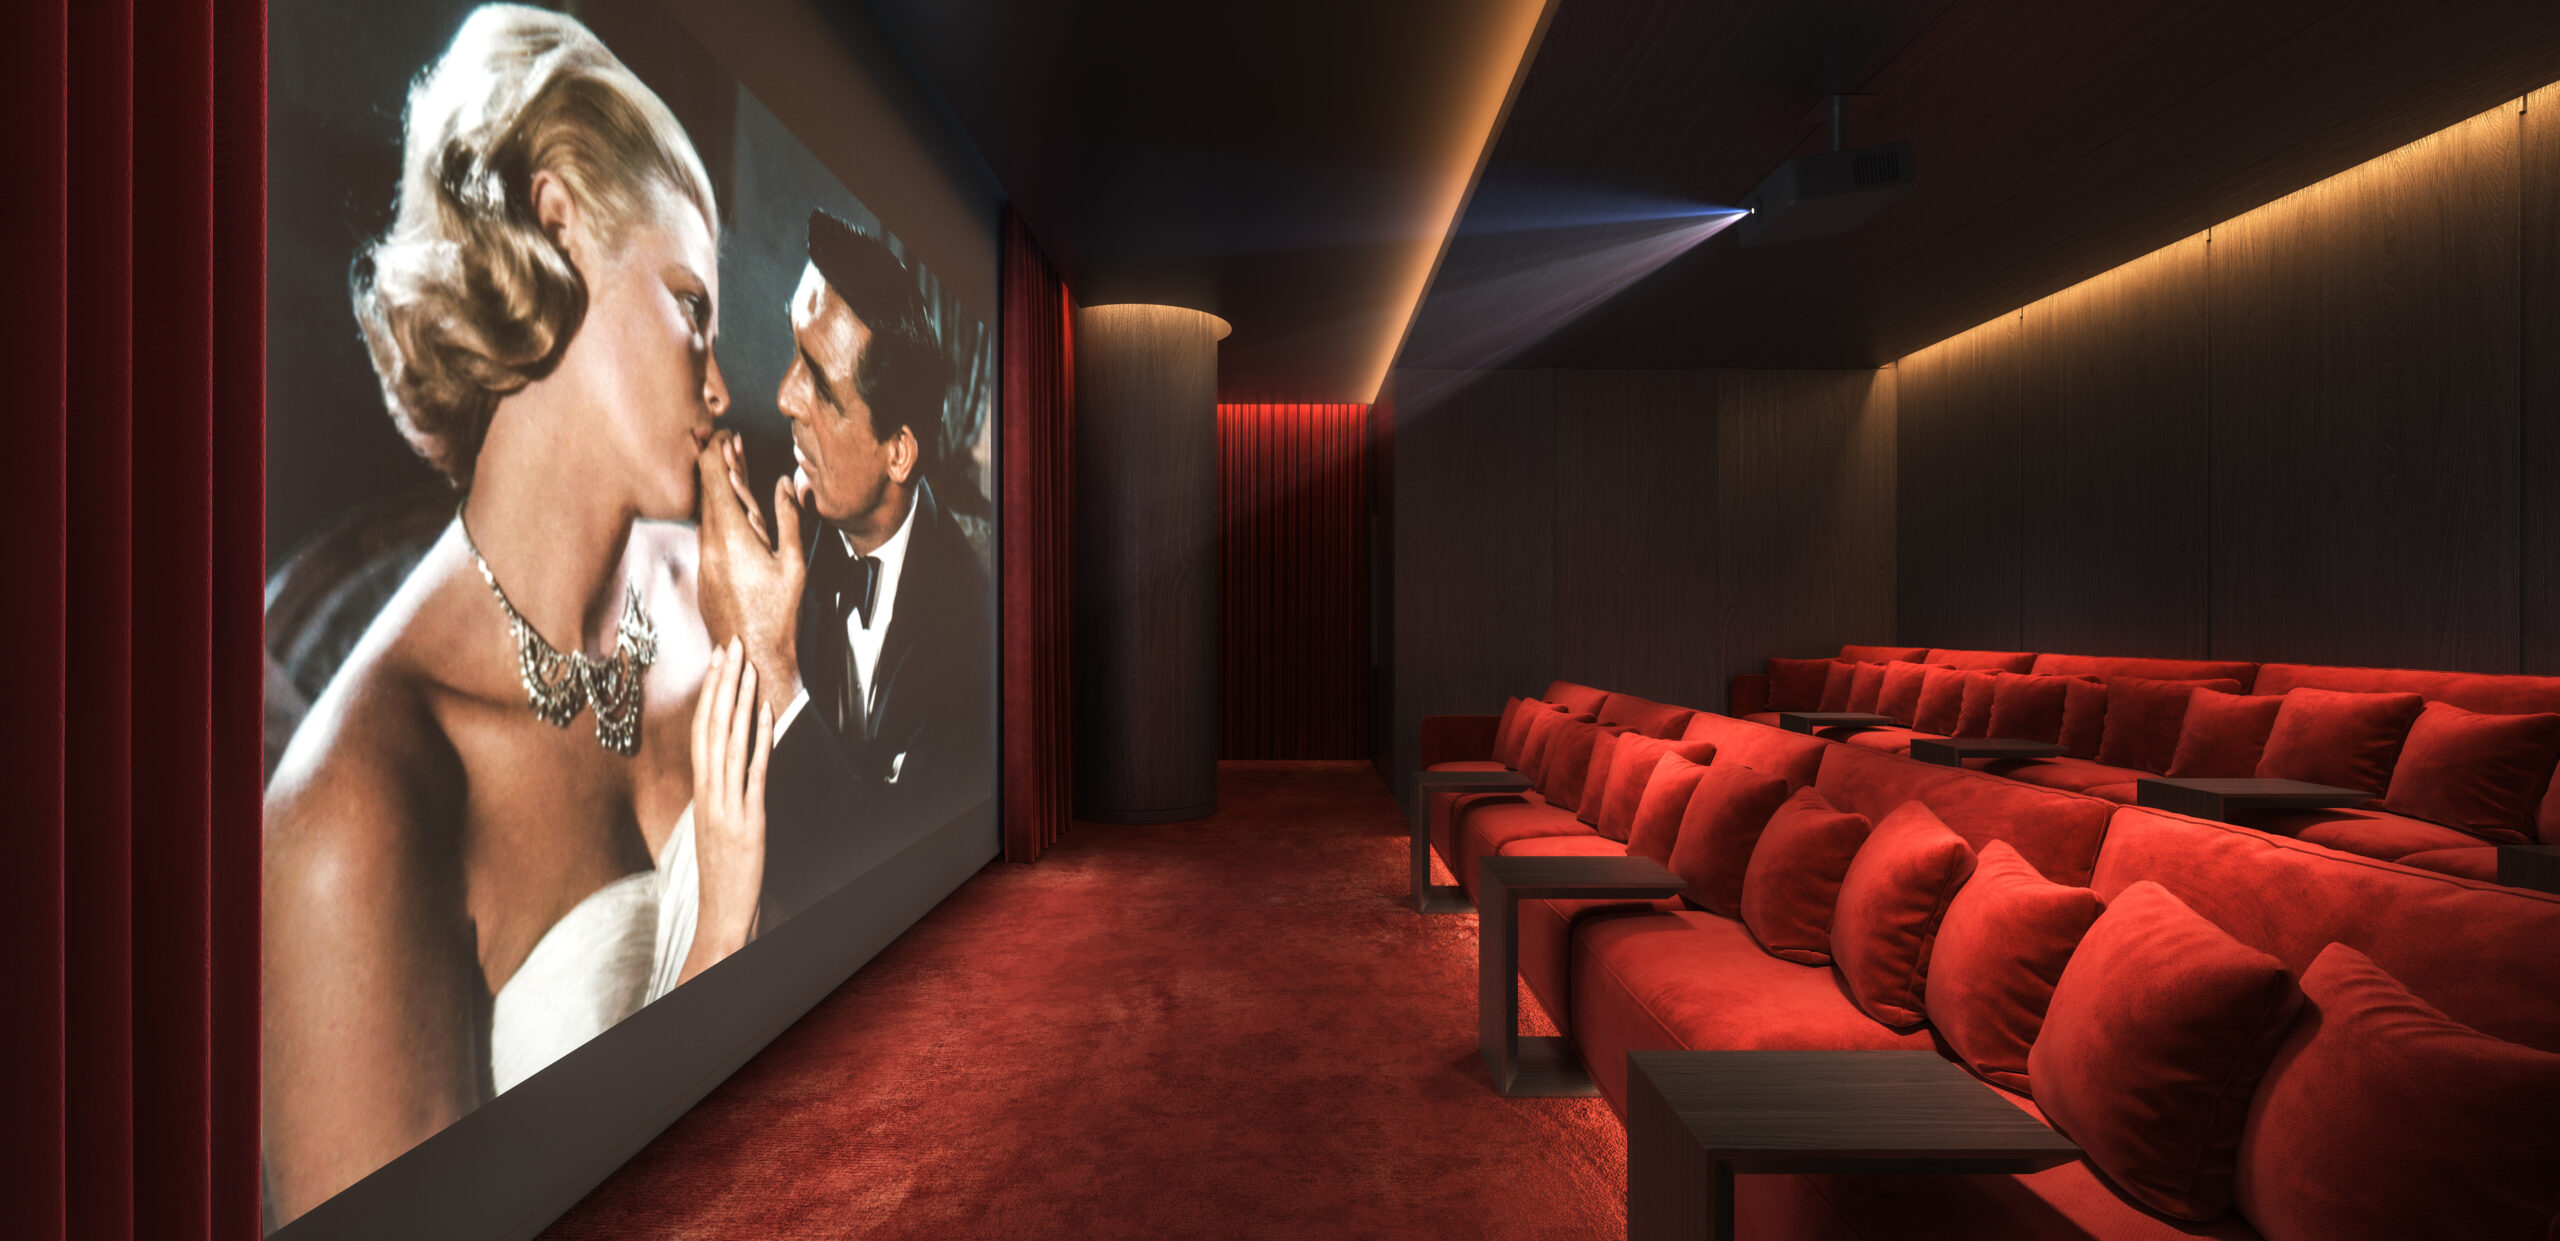 A cinema hall with minimum sitting arrangement of red furniture.